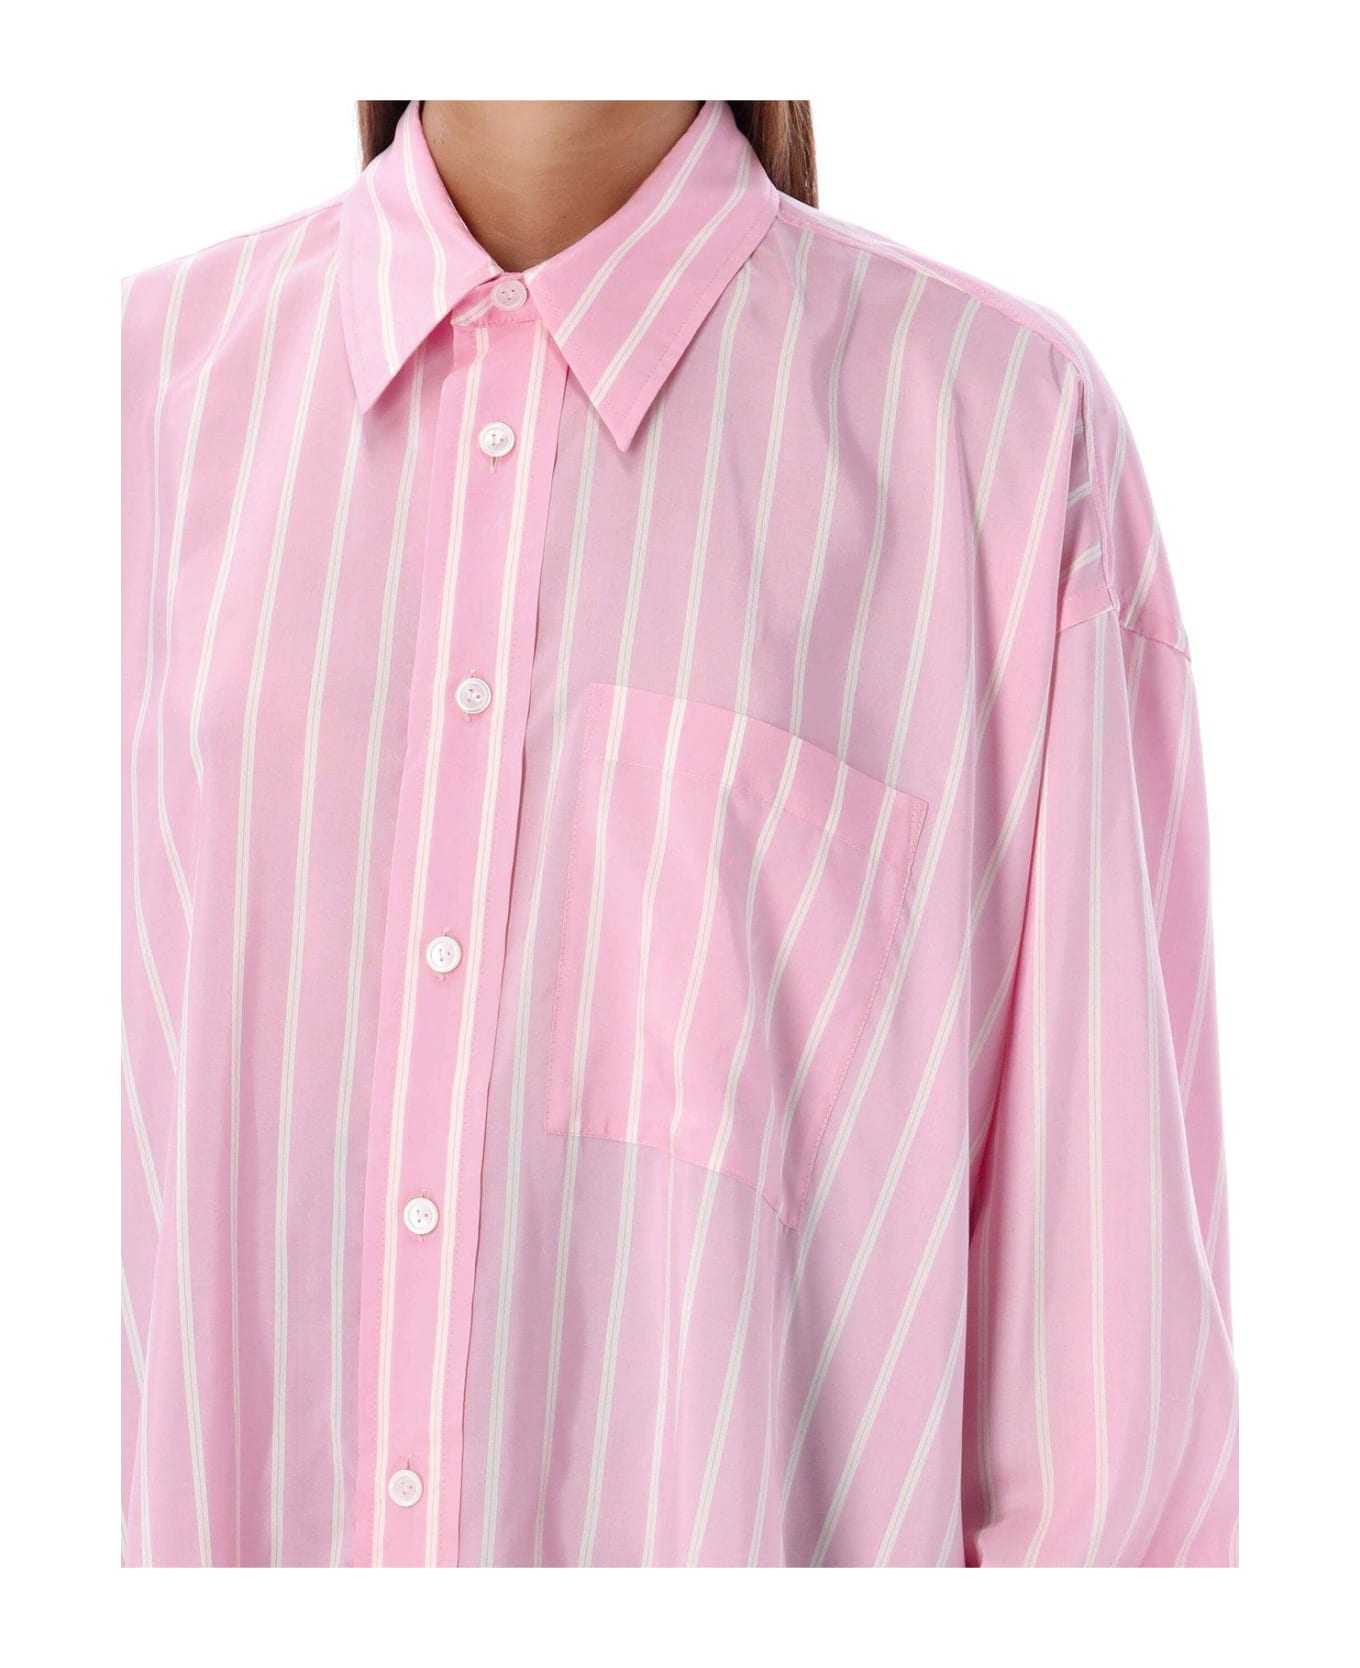 Bottega Veneta Silk Shirt With Striped Pattern - PINK STRIPES シャツ